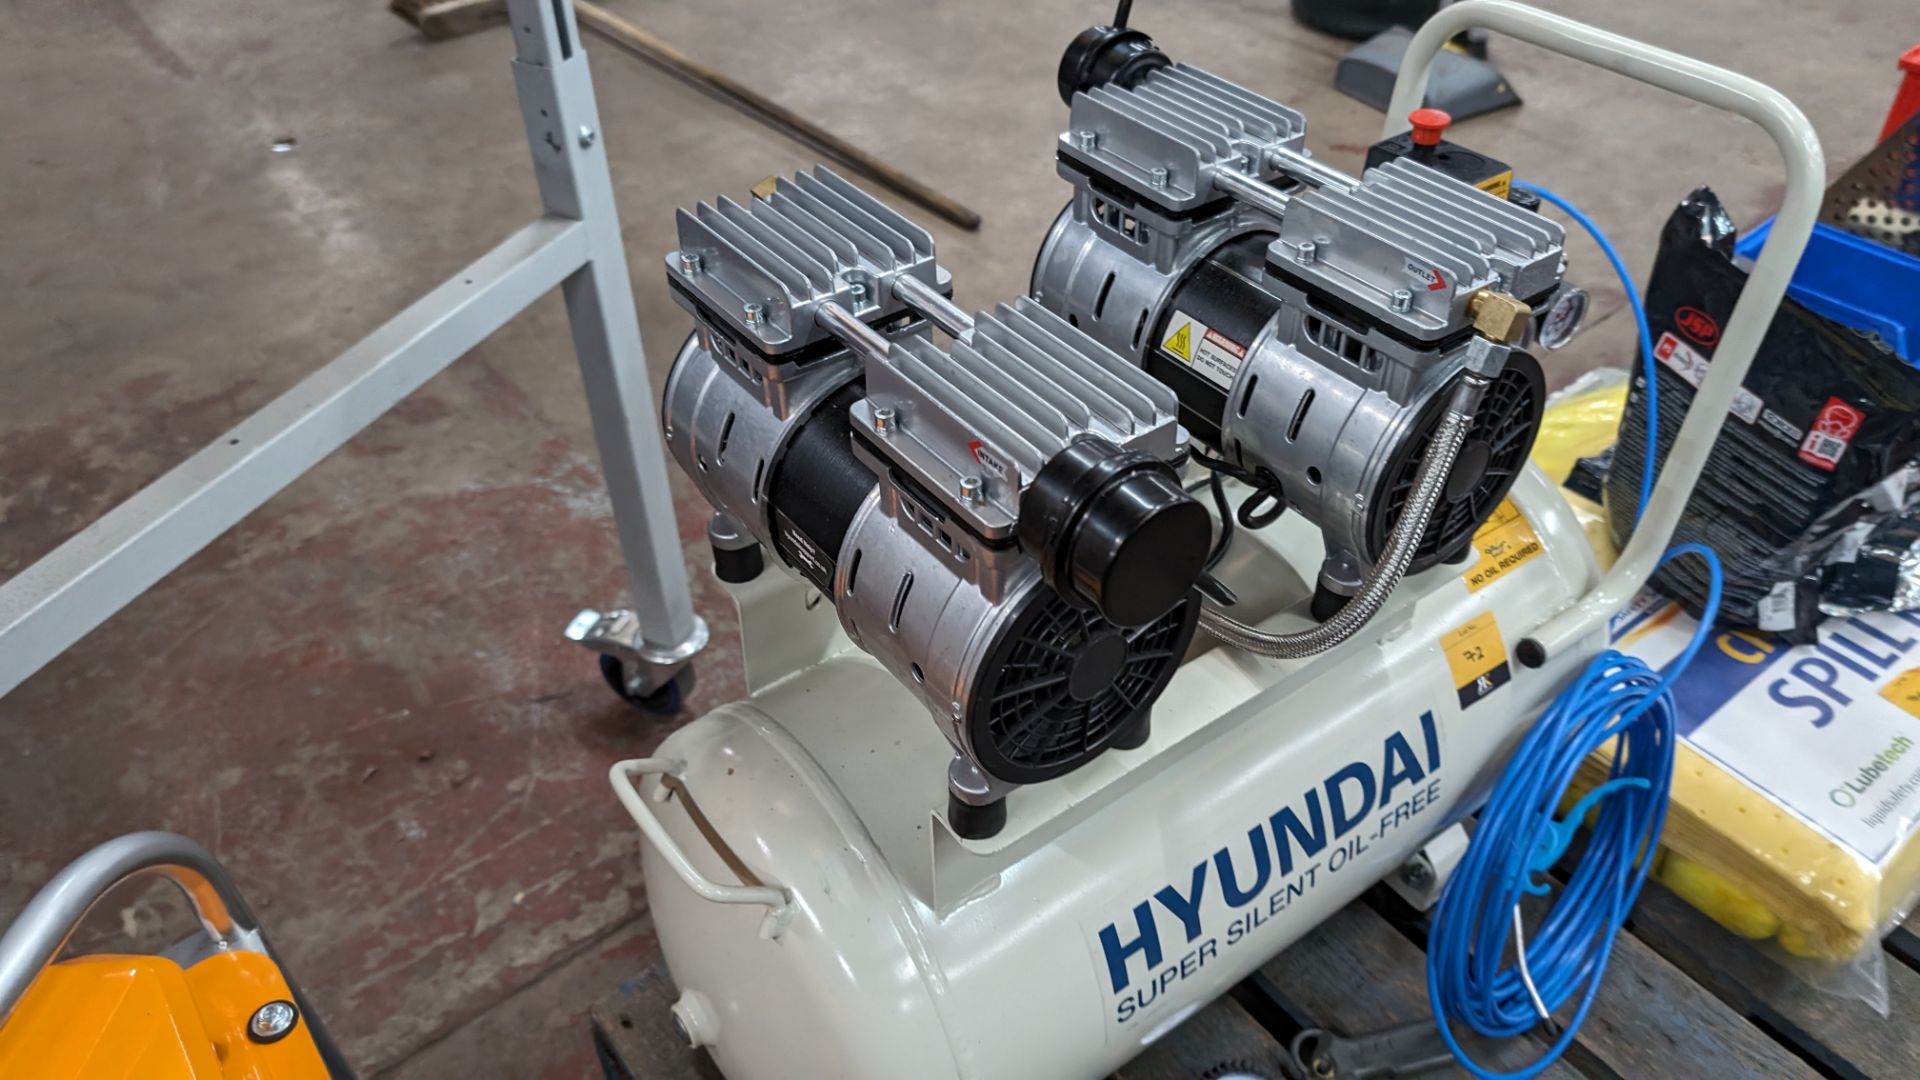 Hyundai super silent oil-free compressor system model HY27550 - Bild 6 aus 11